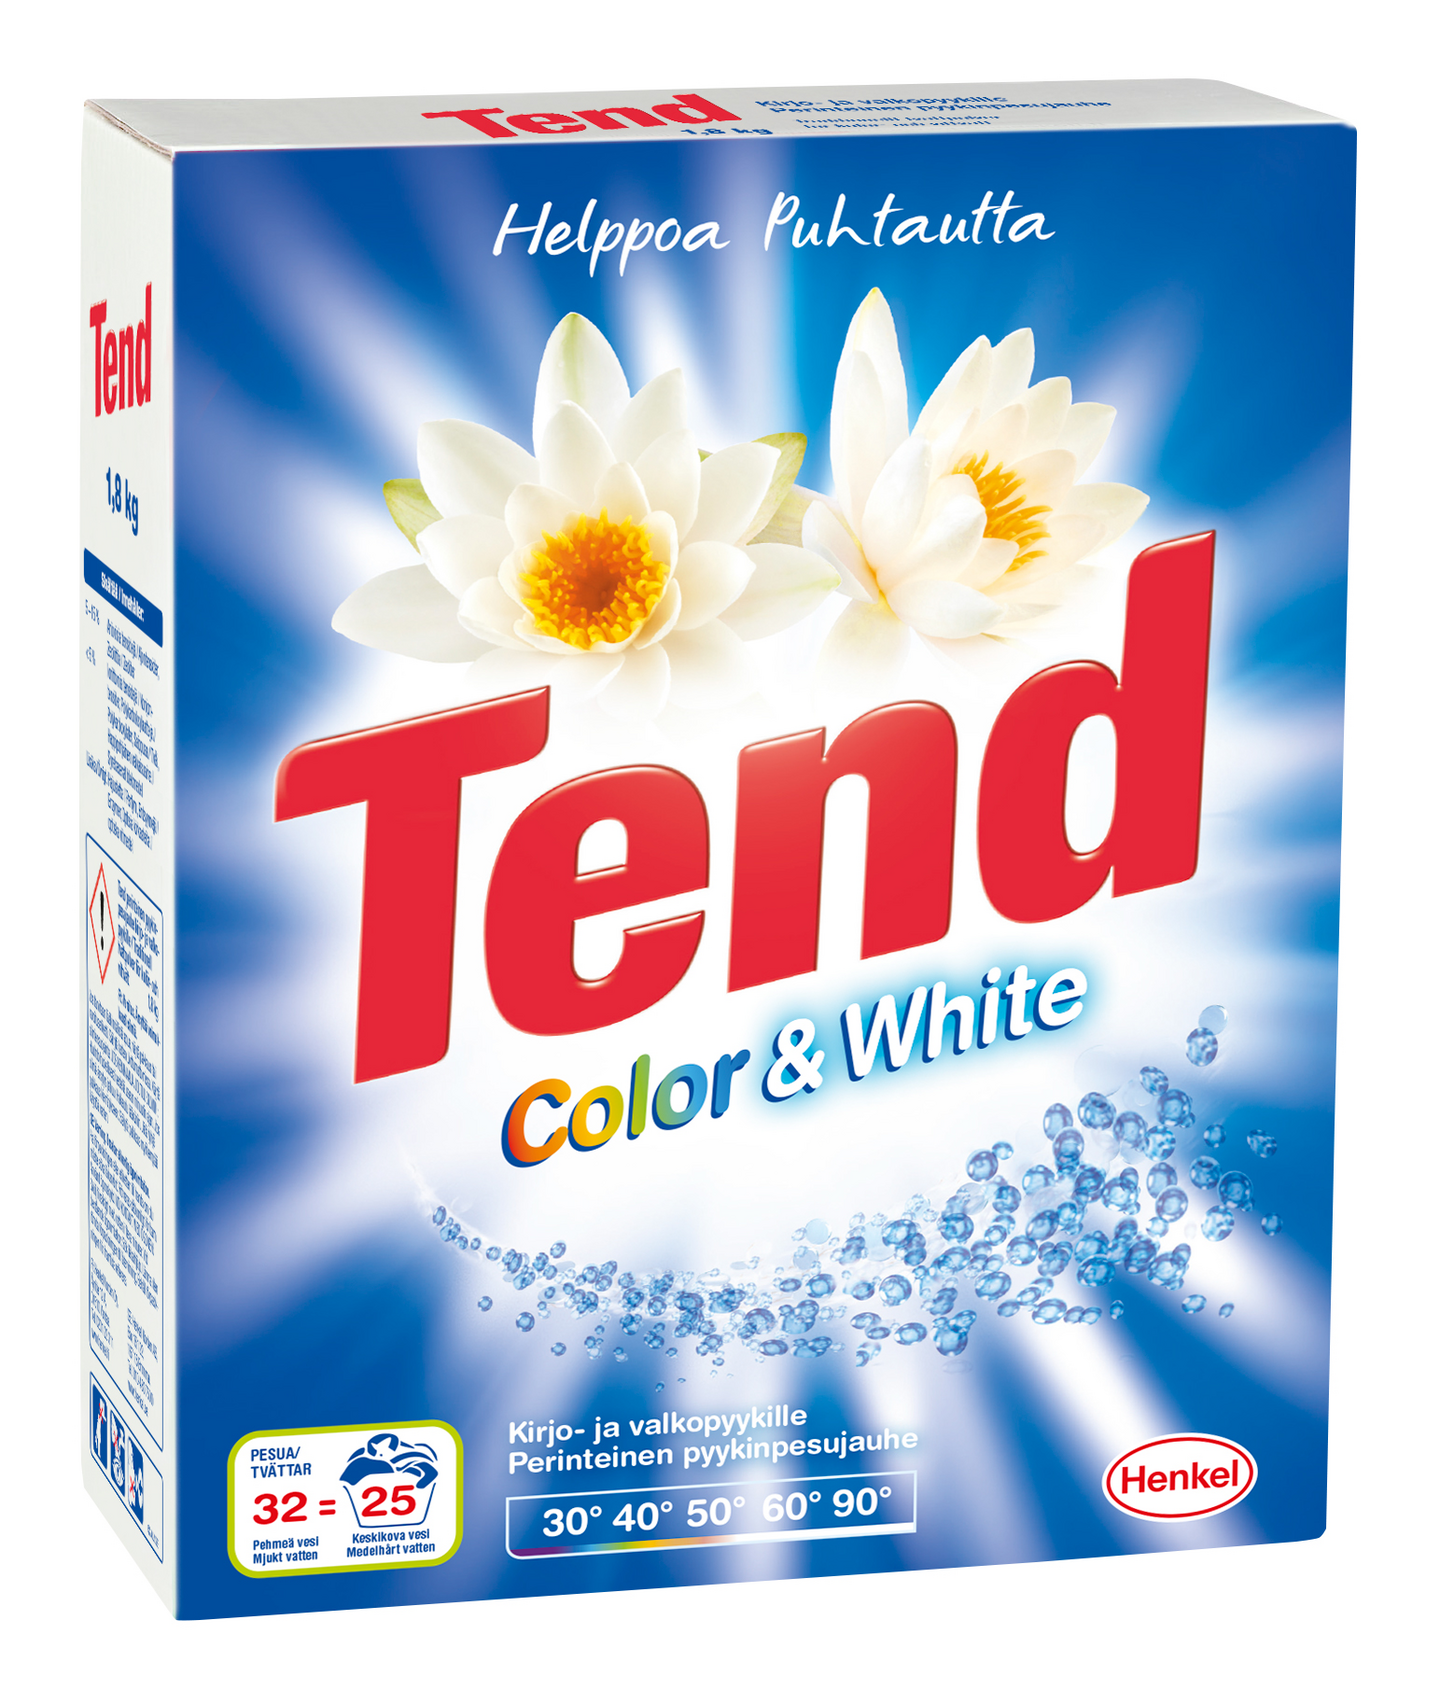 Tend pyykinpesujauhe perinteinen Color&White 1,8kg